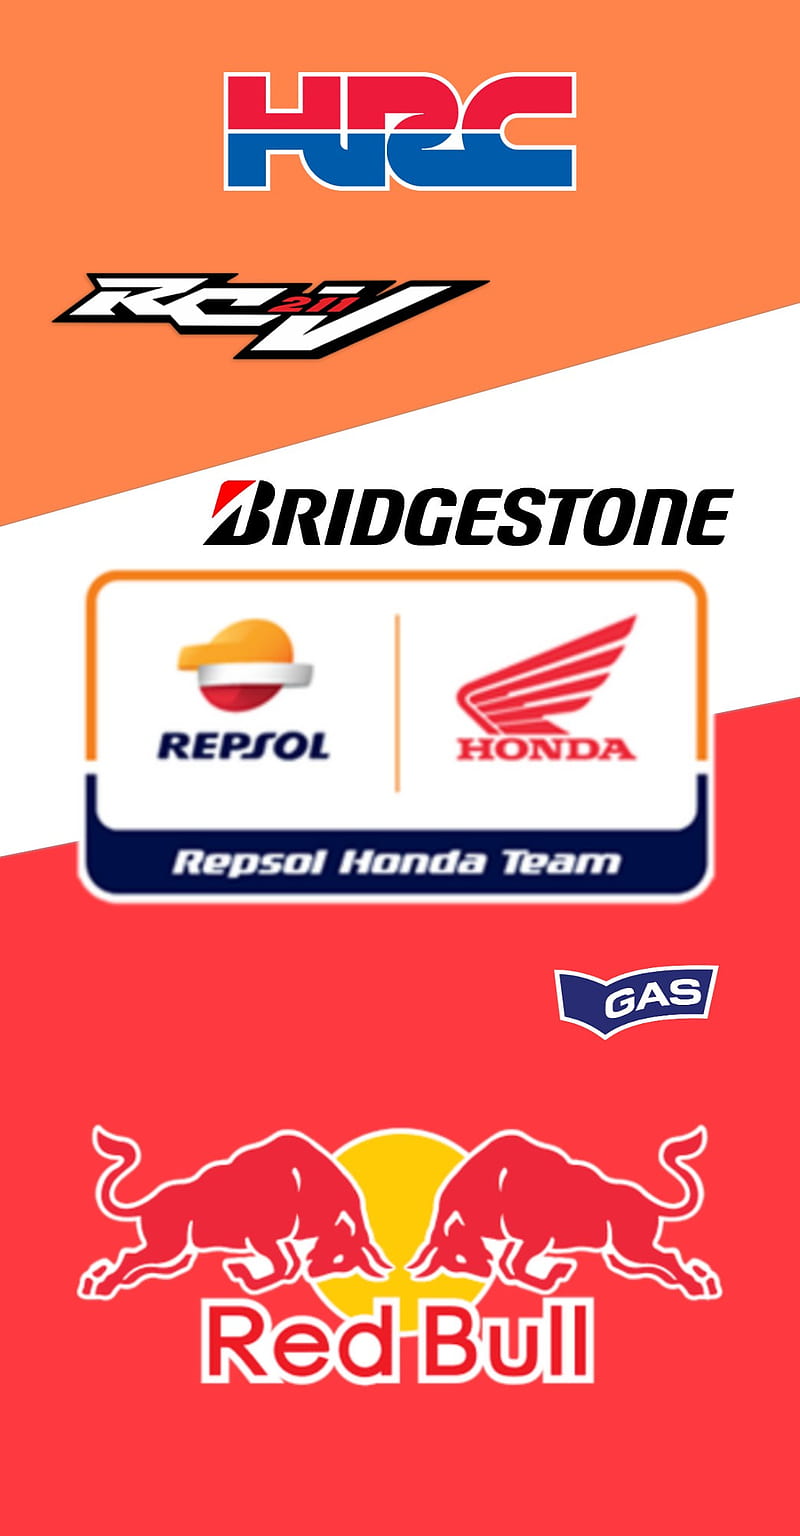 T-shirt Man Repsol Honda - Logo